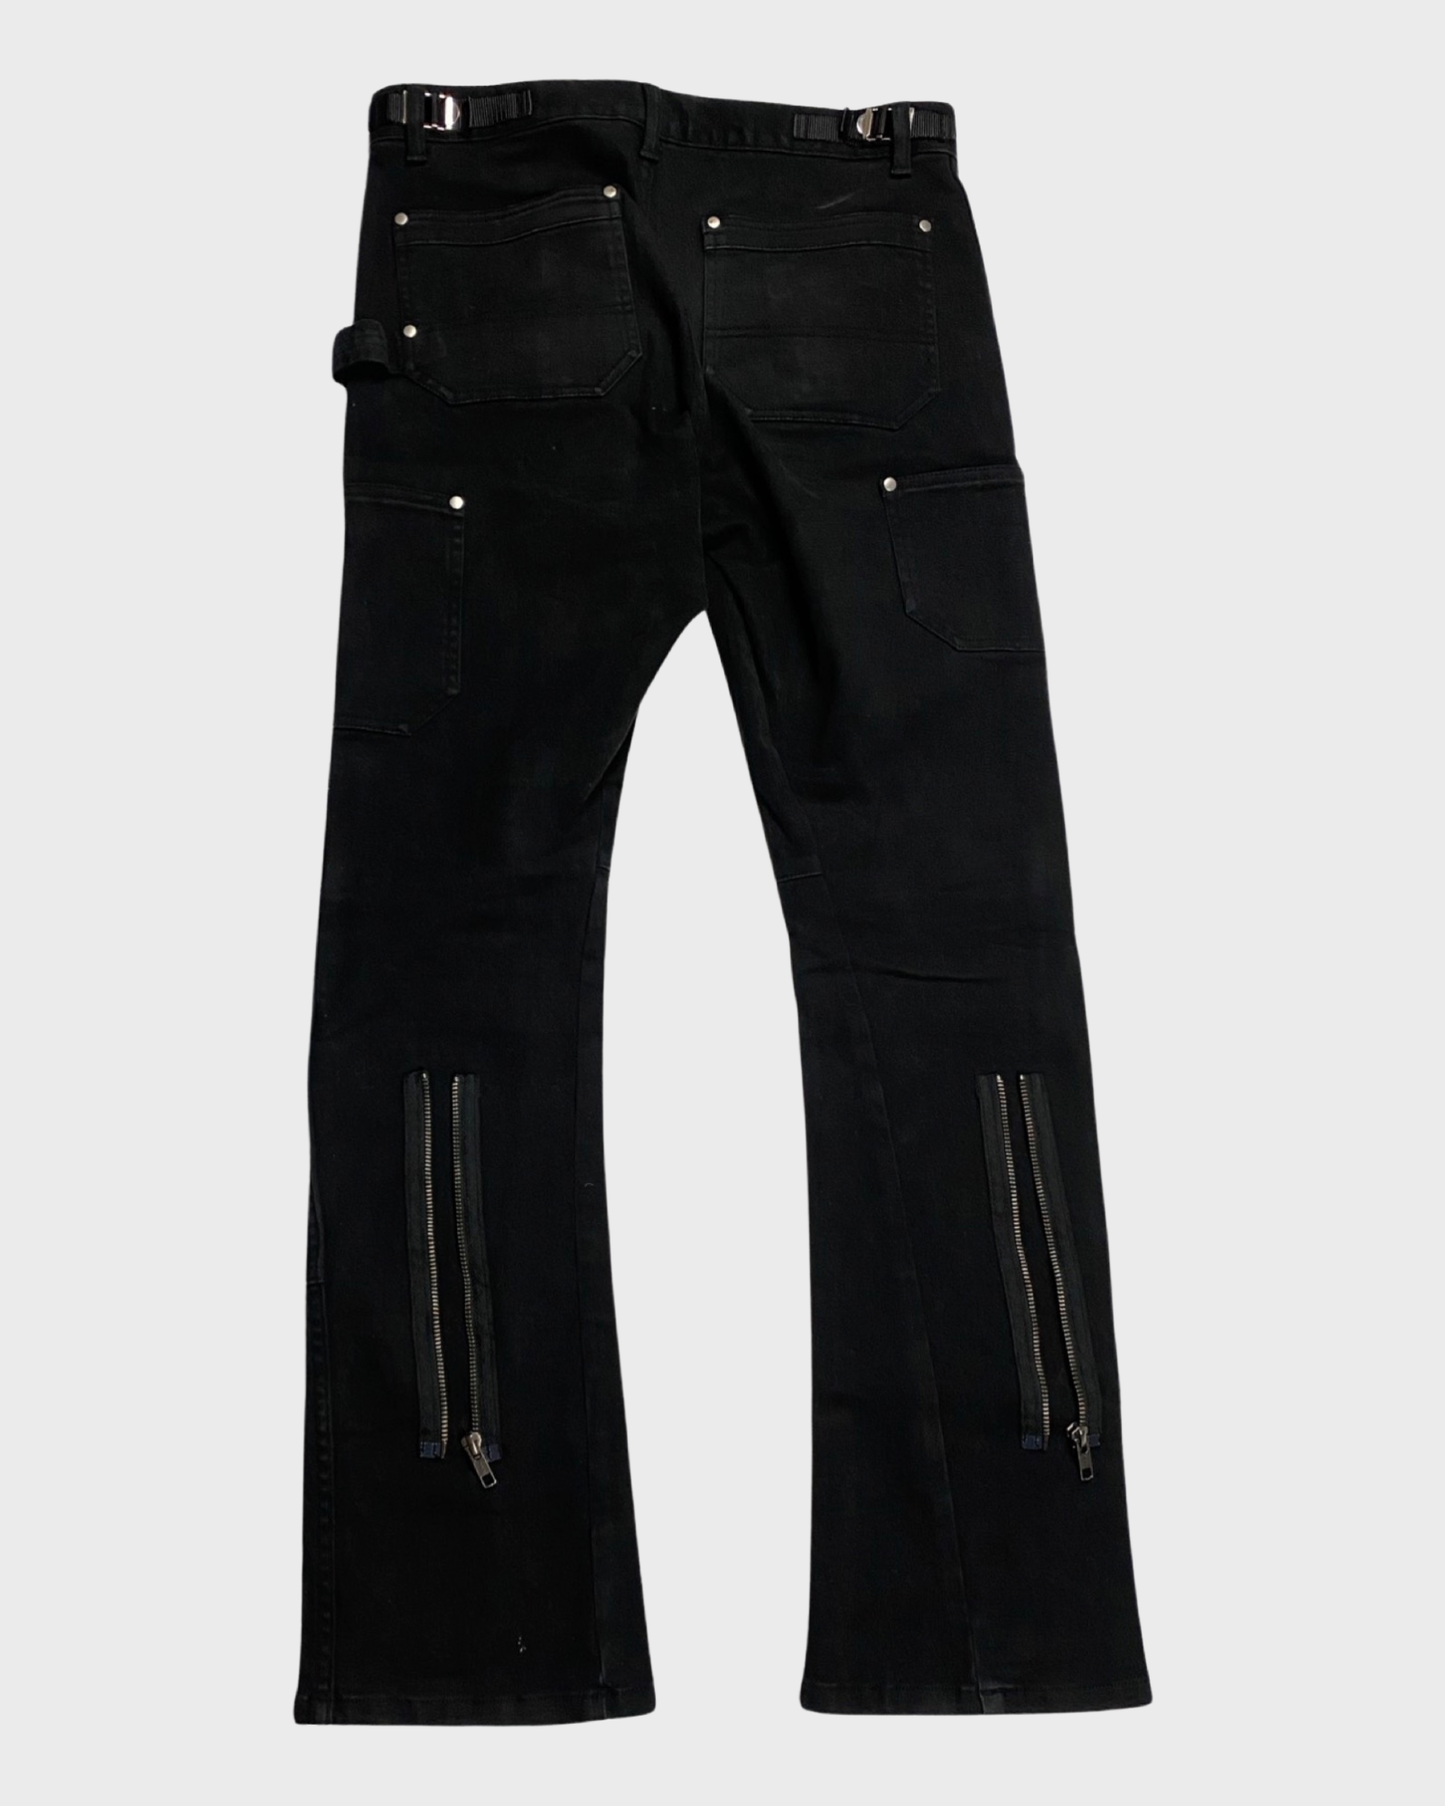 Vuja De Flared backzip carpenter workwear jeans pants SZ:W30